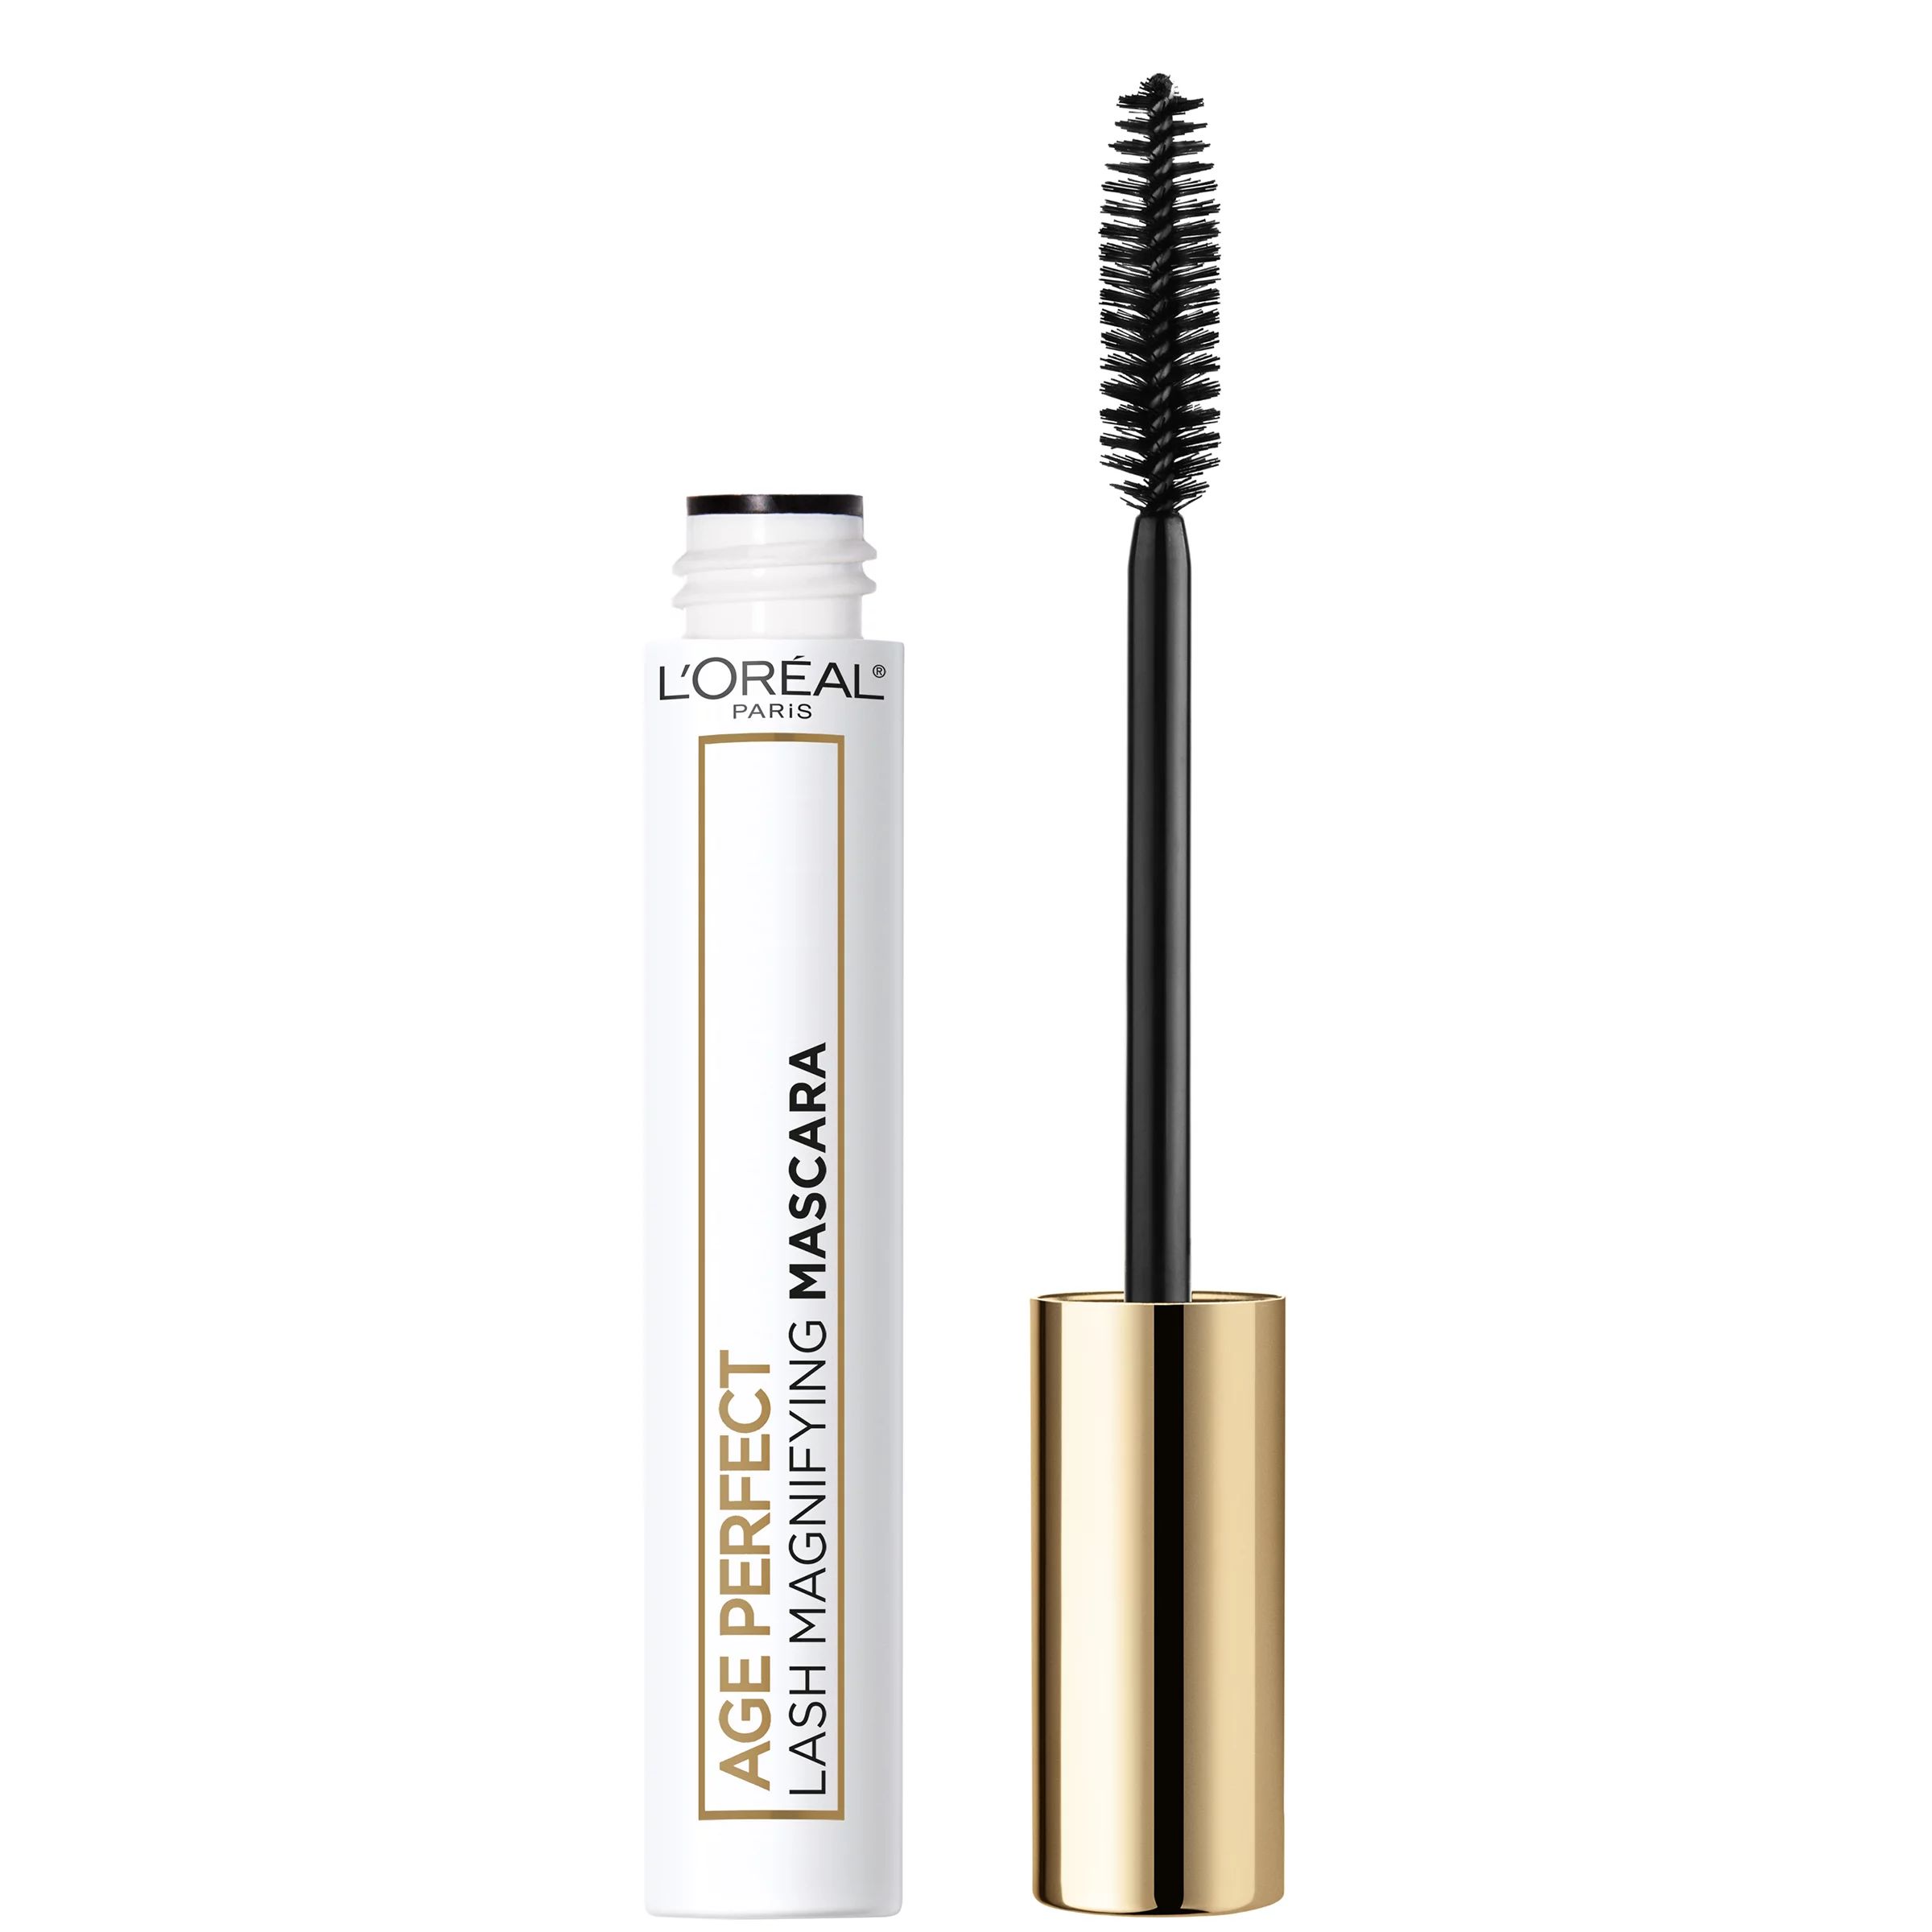 L'Oreal Paris Age Perfect Lash Magnifying Mascara with Conditioning Serum, Black, 0.28 fl. oz. - ... | Walmart (US)